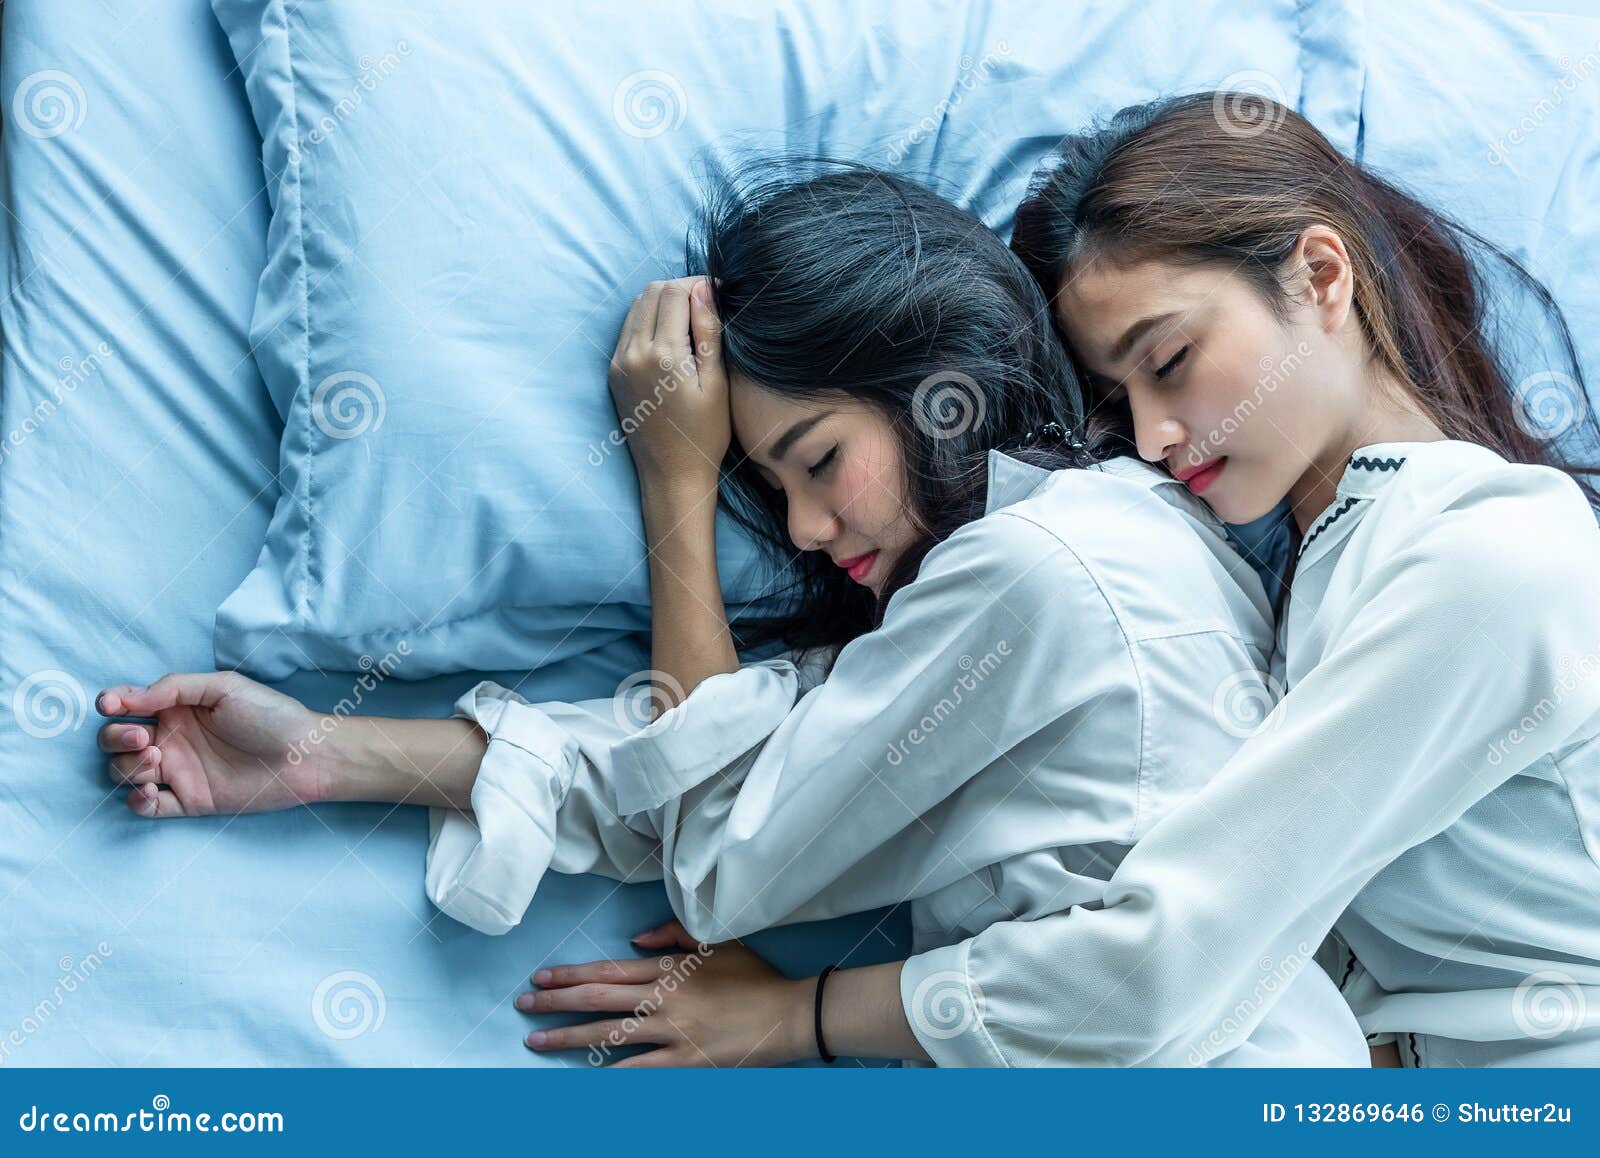 anbu saravanan add photo two girls sleeping together